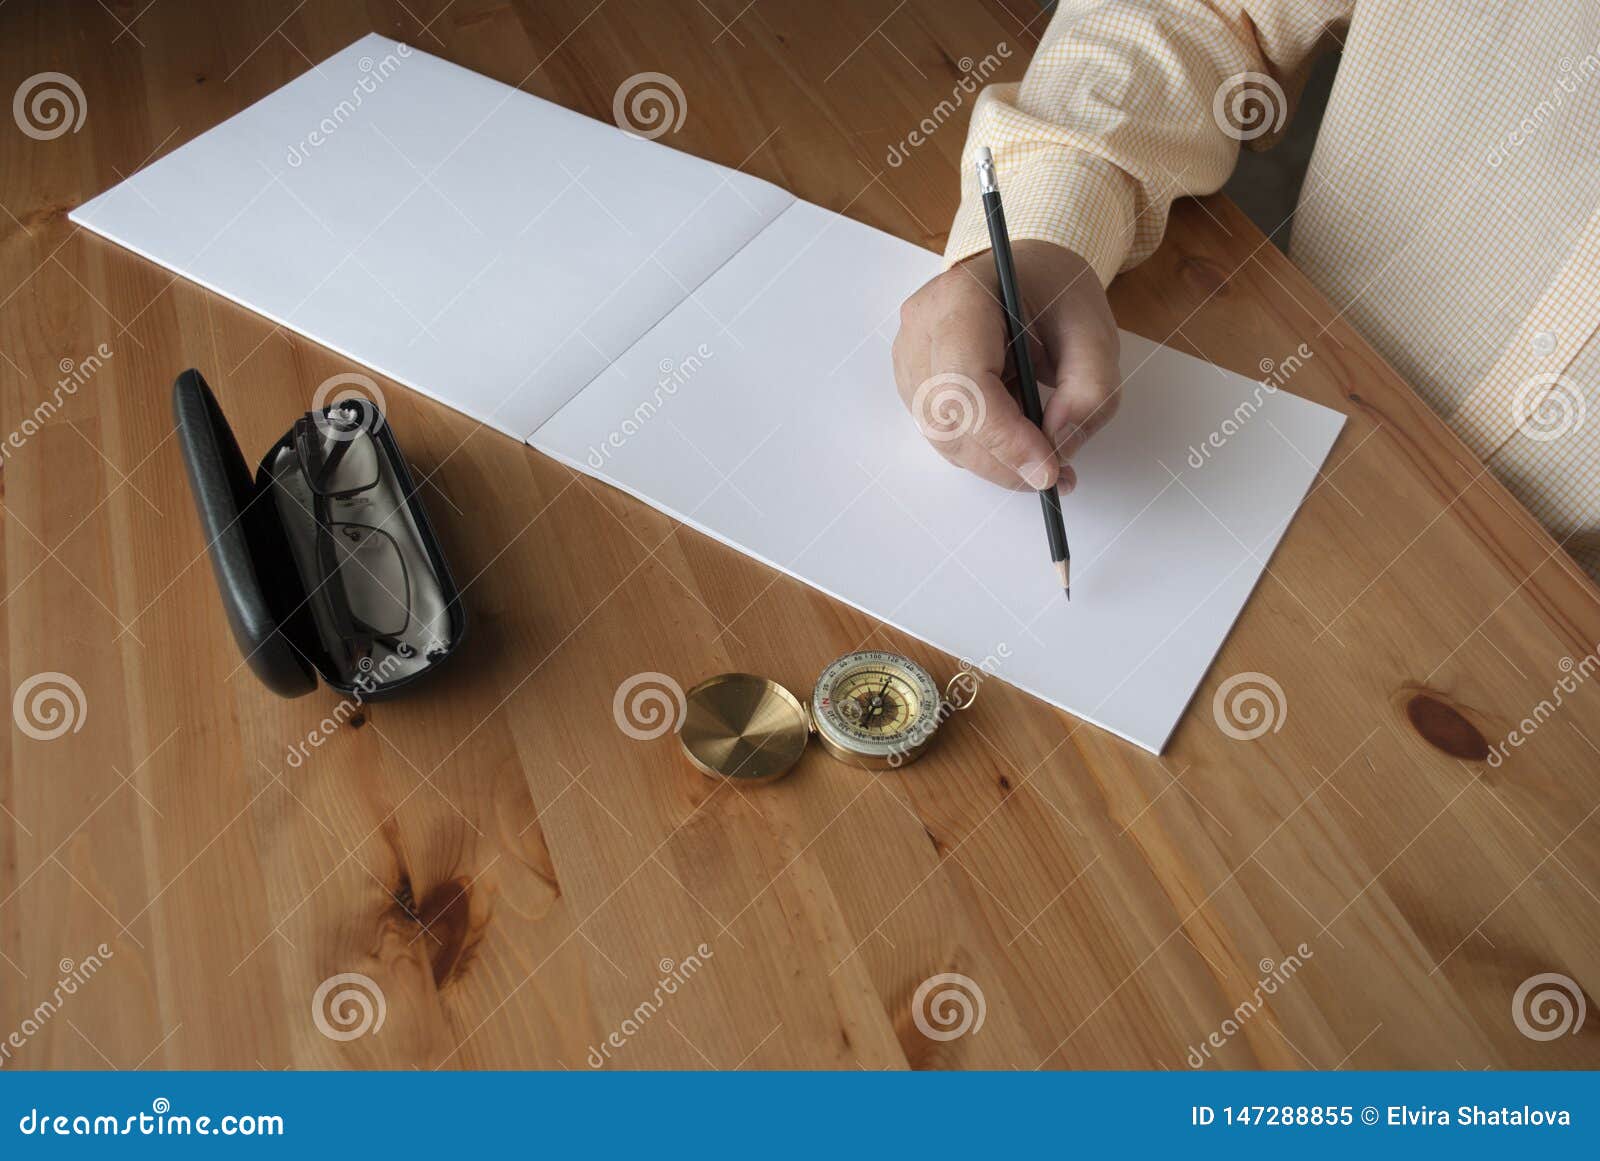 Man is writing close up stock image. Image of developer - 147288855